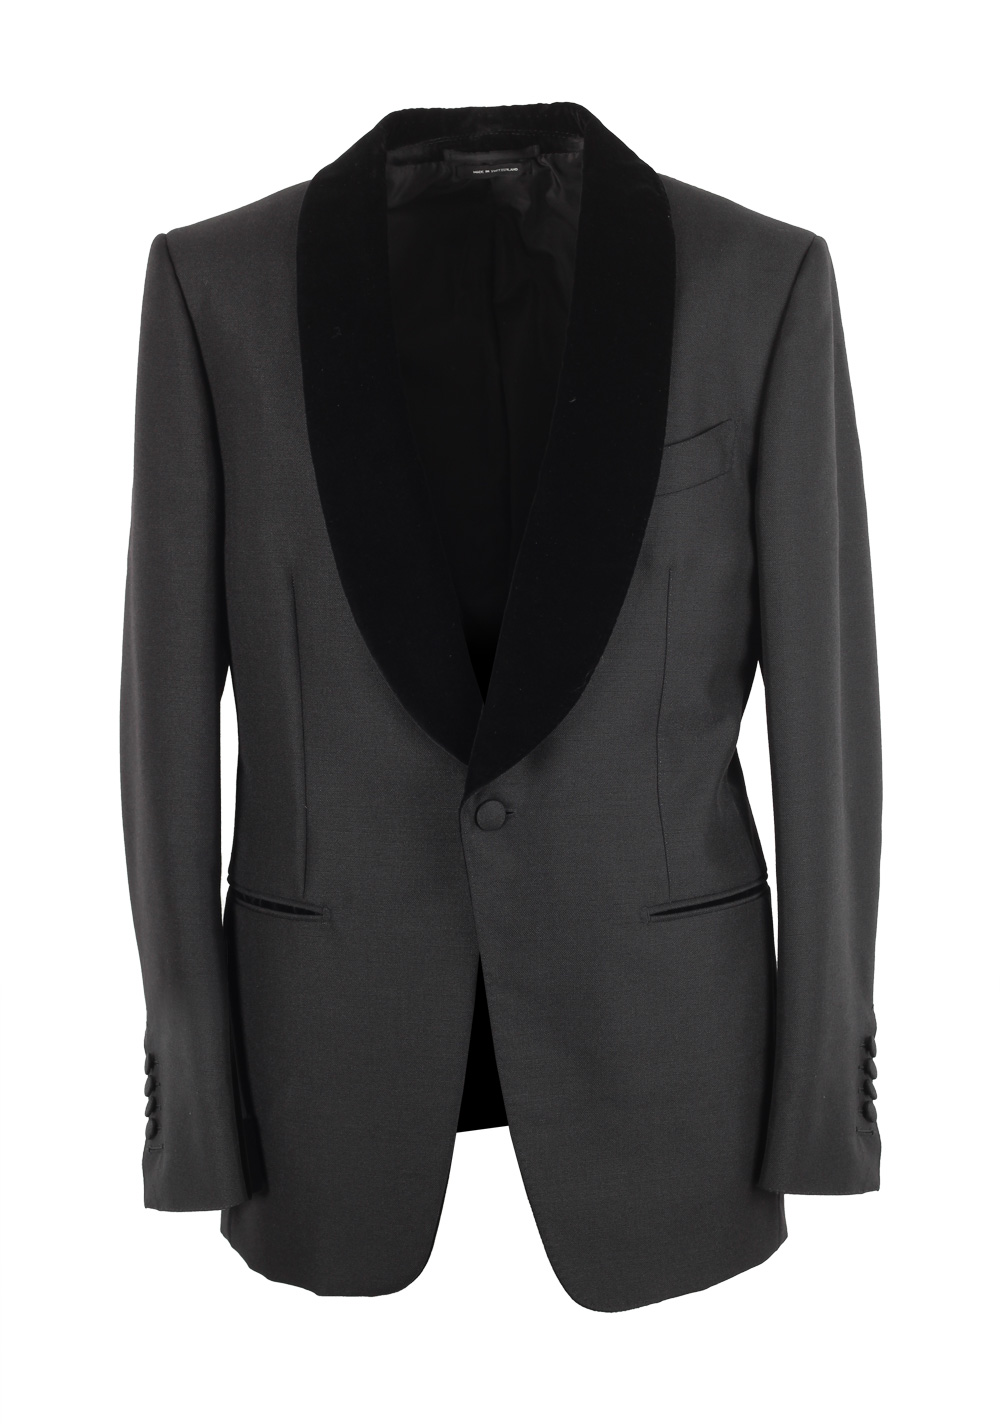 TOM FORD Shelton Shawl Collar Black Tuxedo Suit Smoking Size 48 / 38R U.S. | Costume Limité